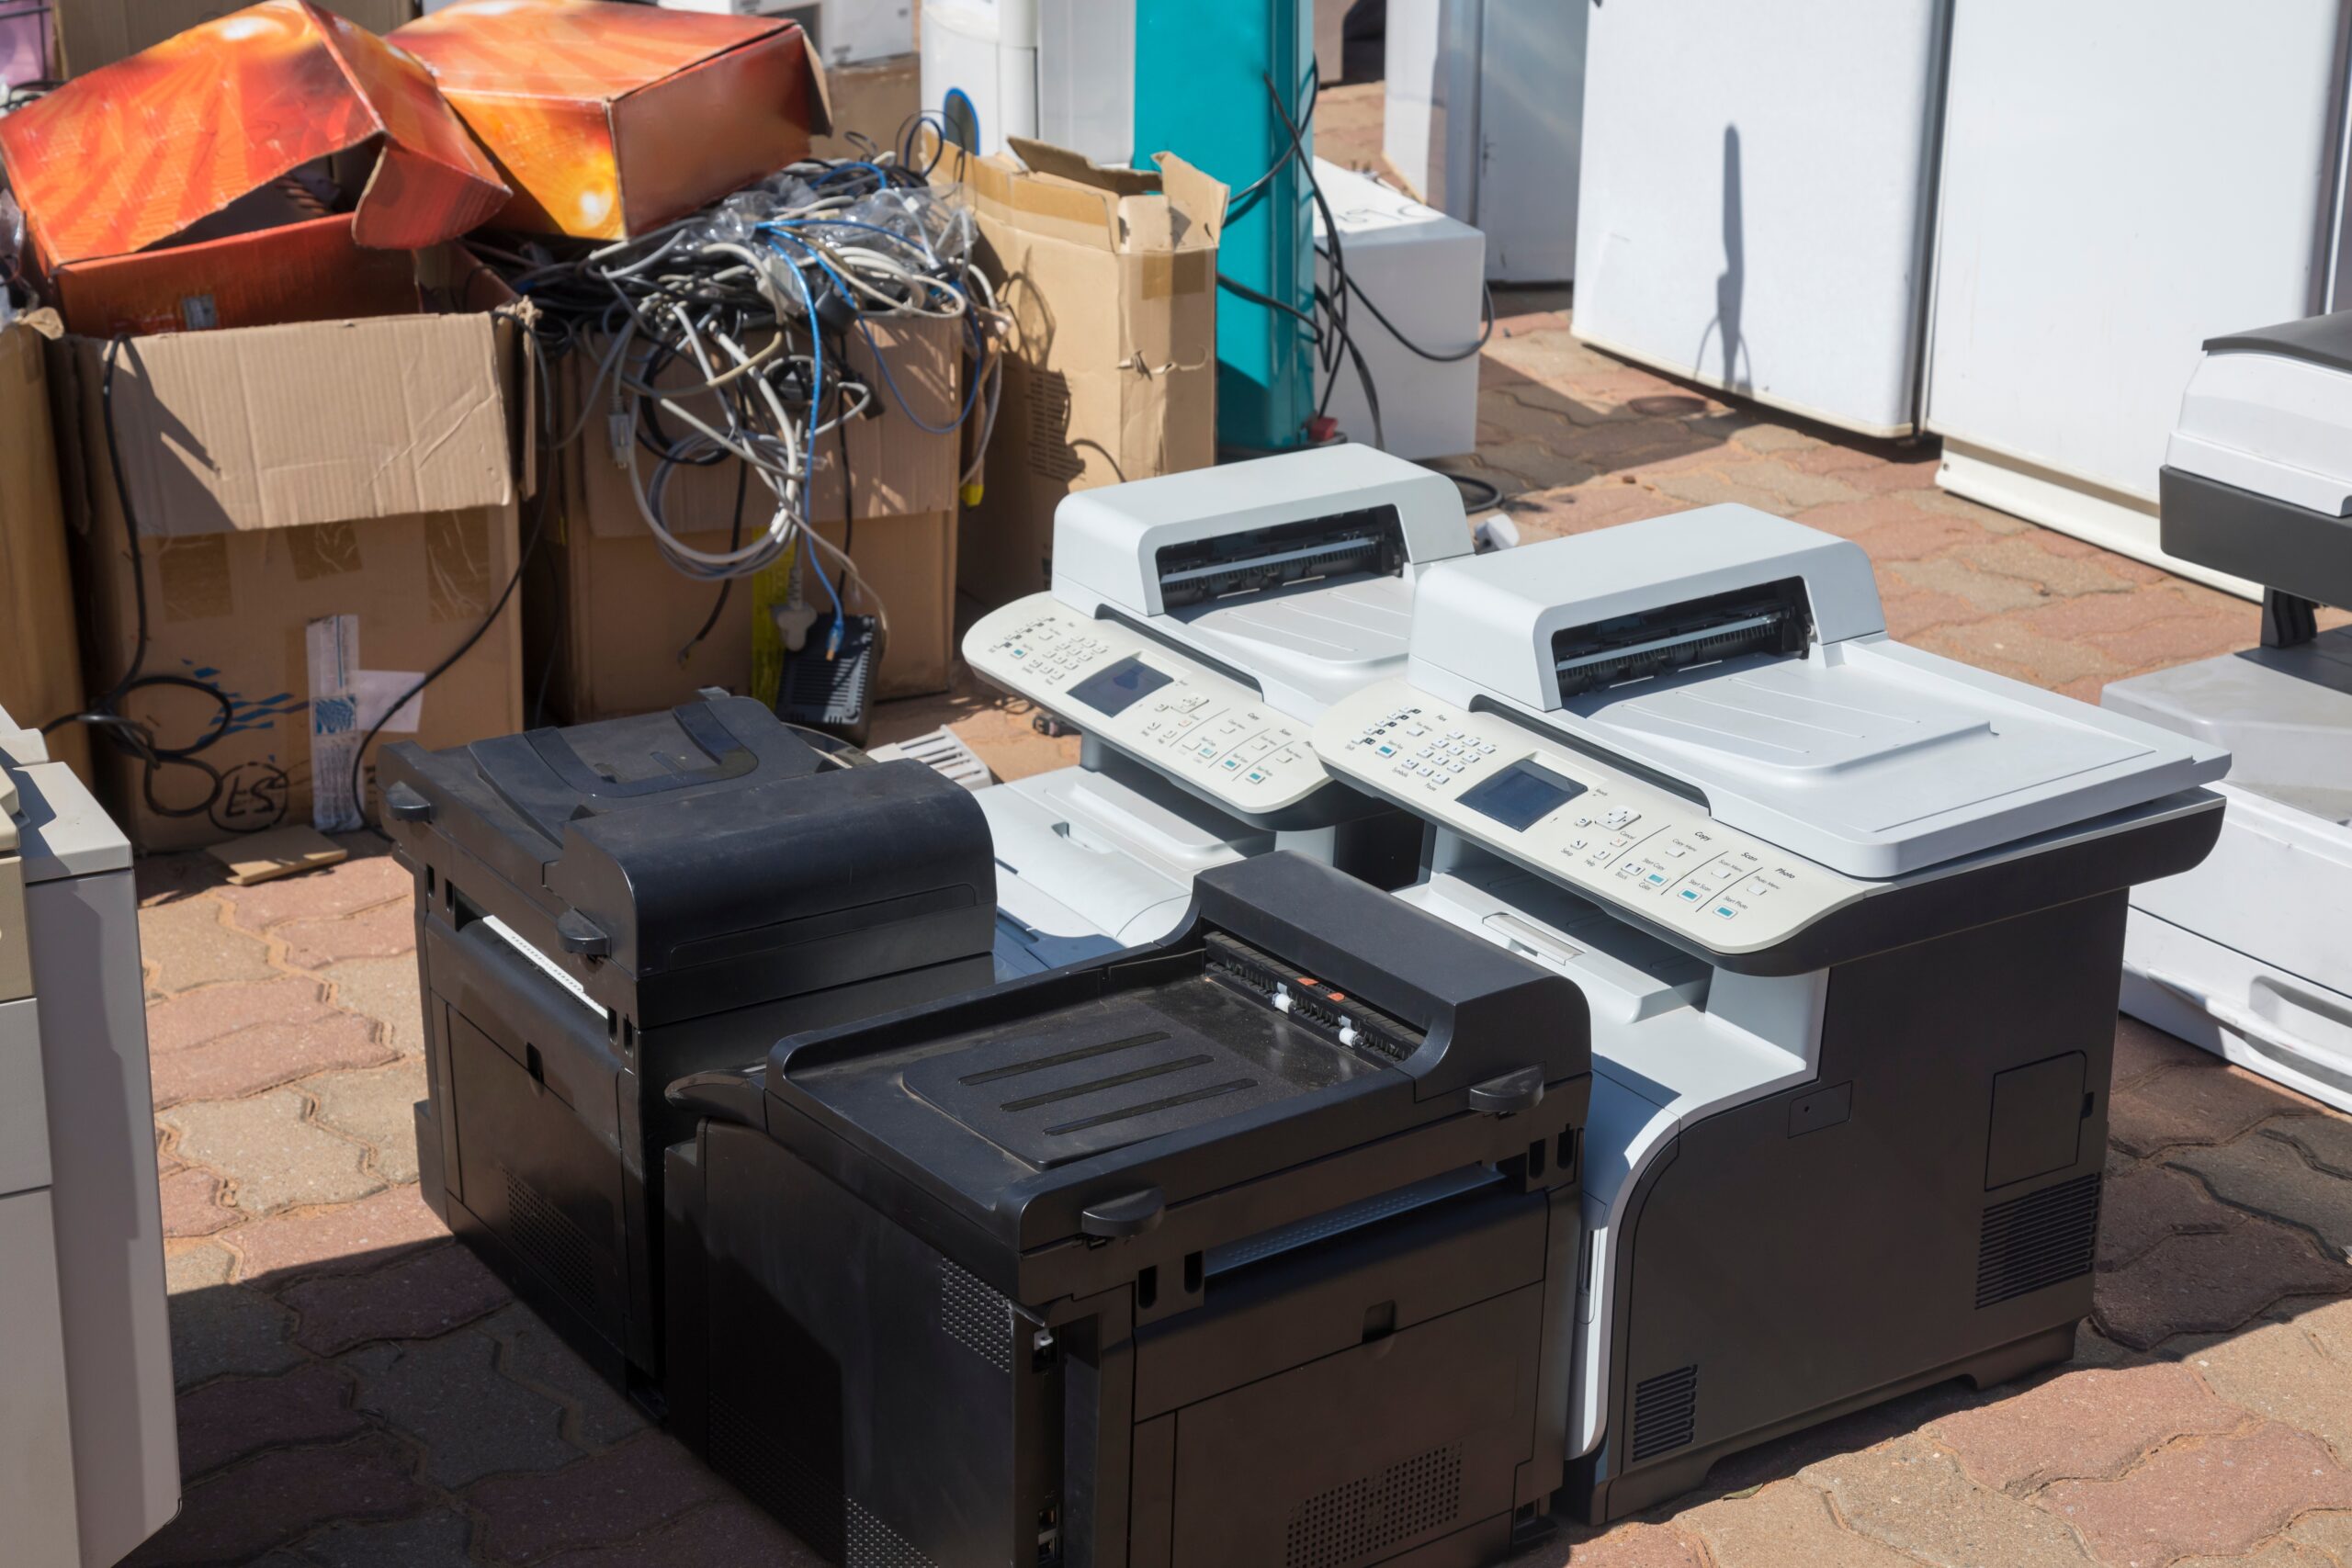 How do Printers impact the Environment